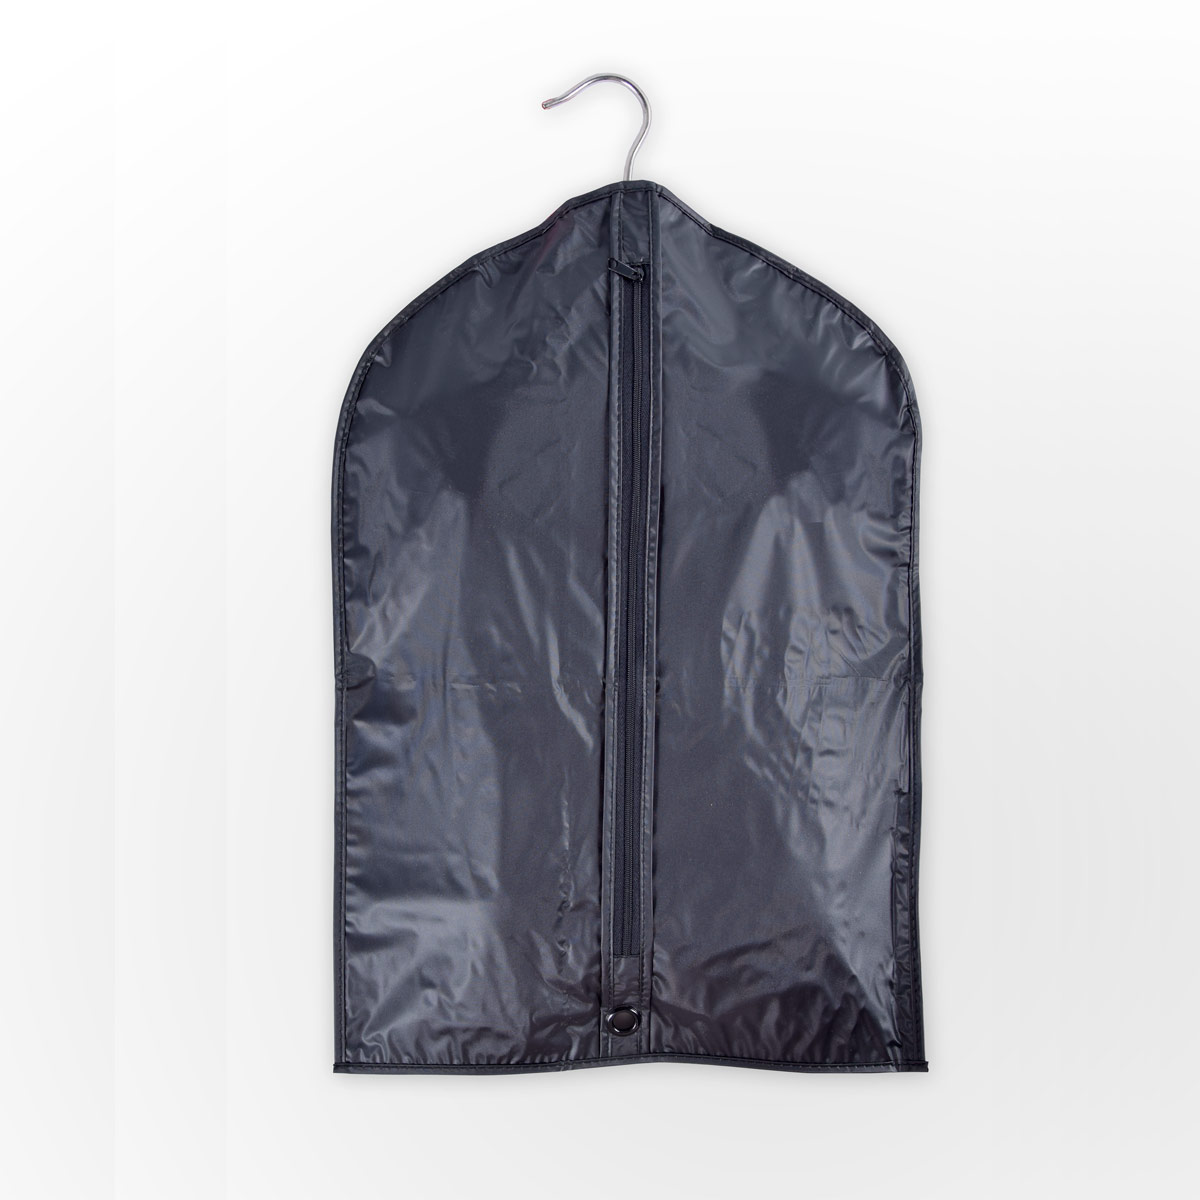 Garment bag for pet clothing – 4187 (35 x 50 cm, black)